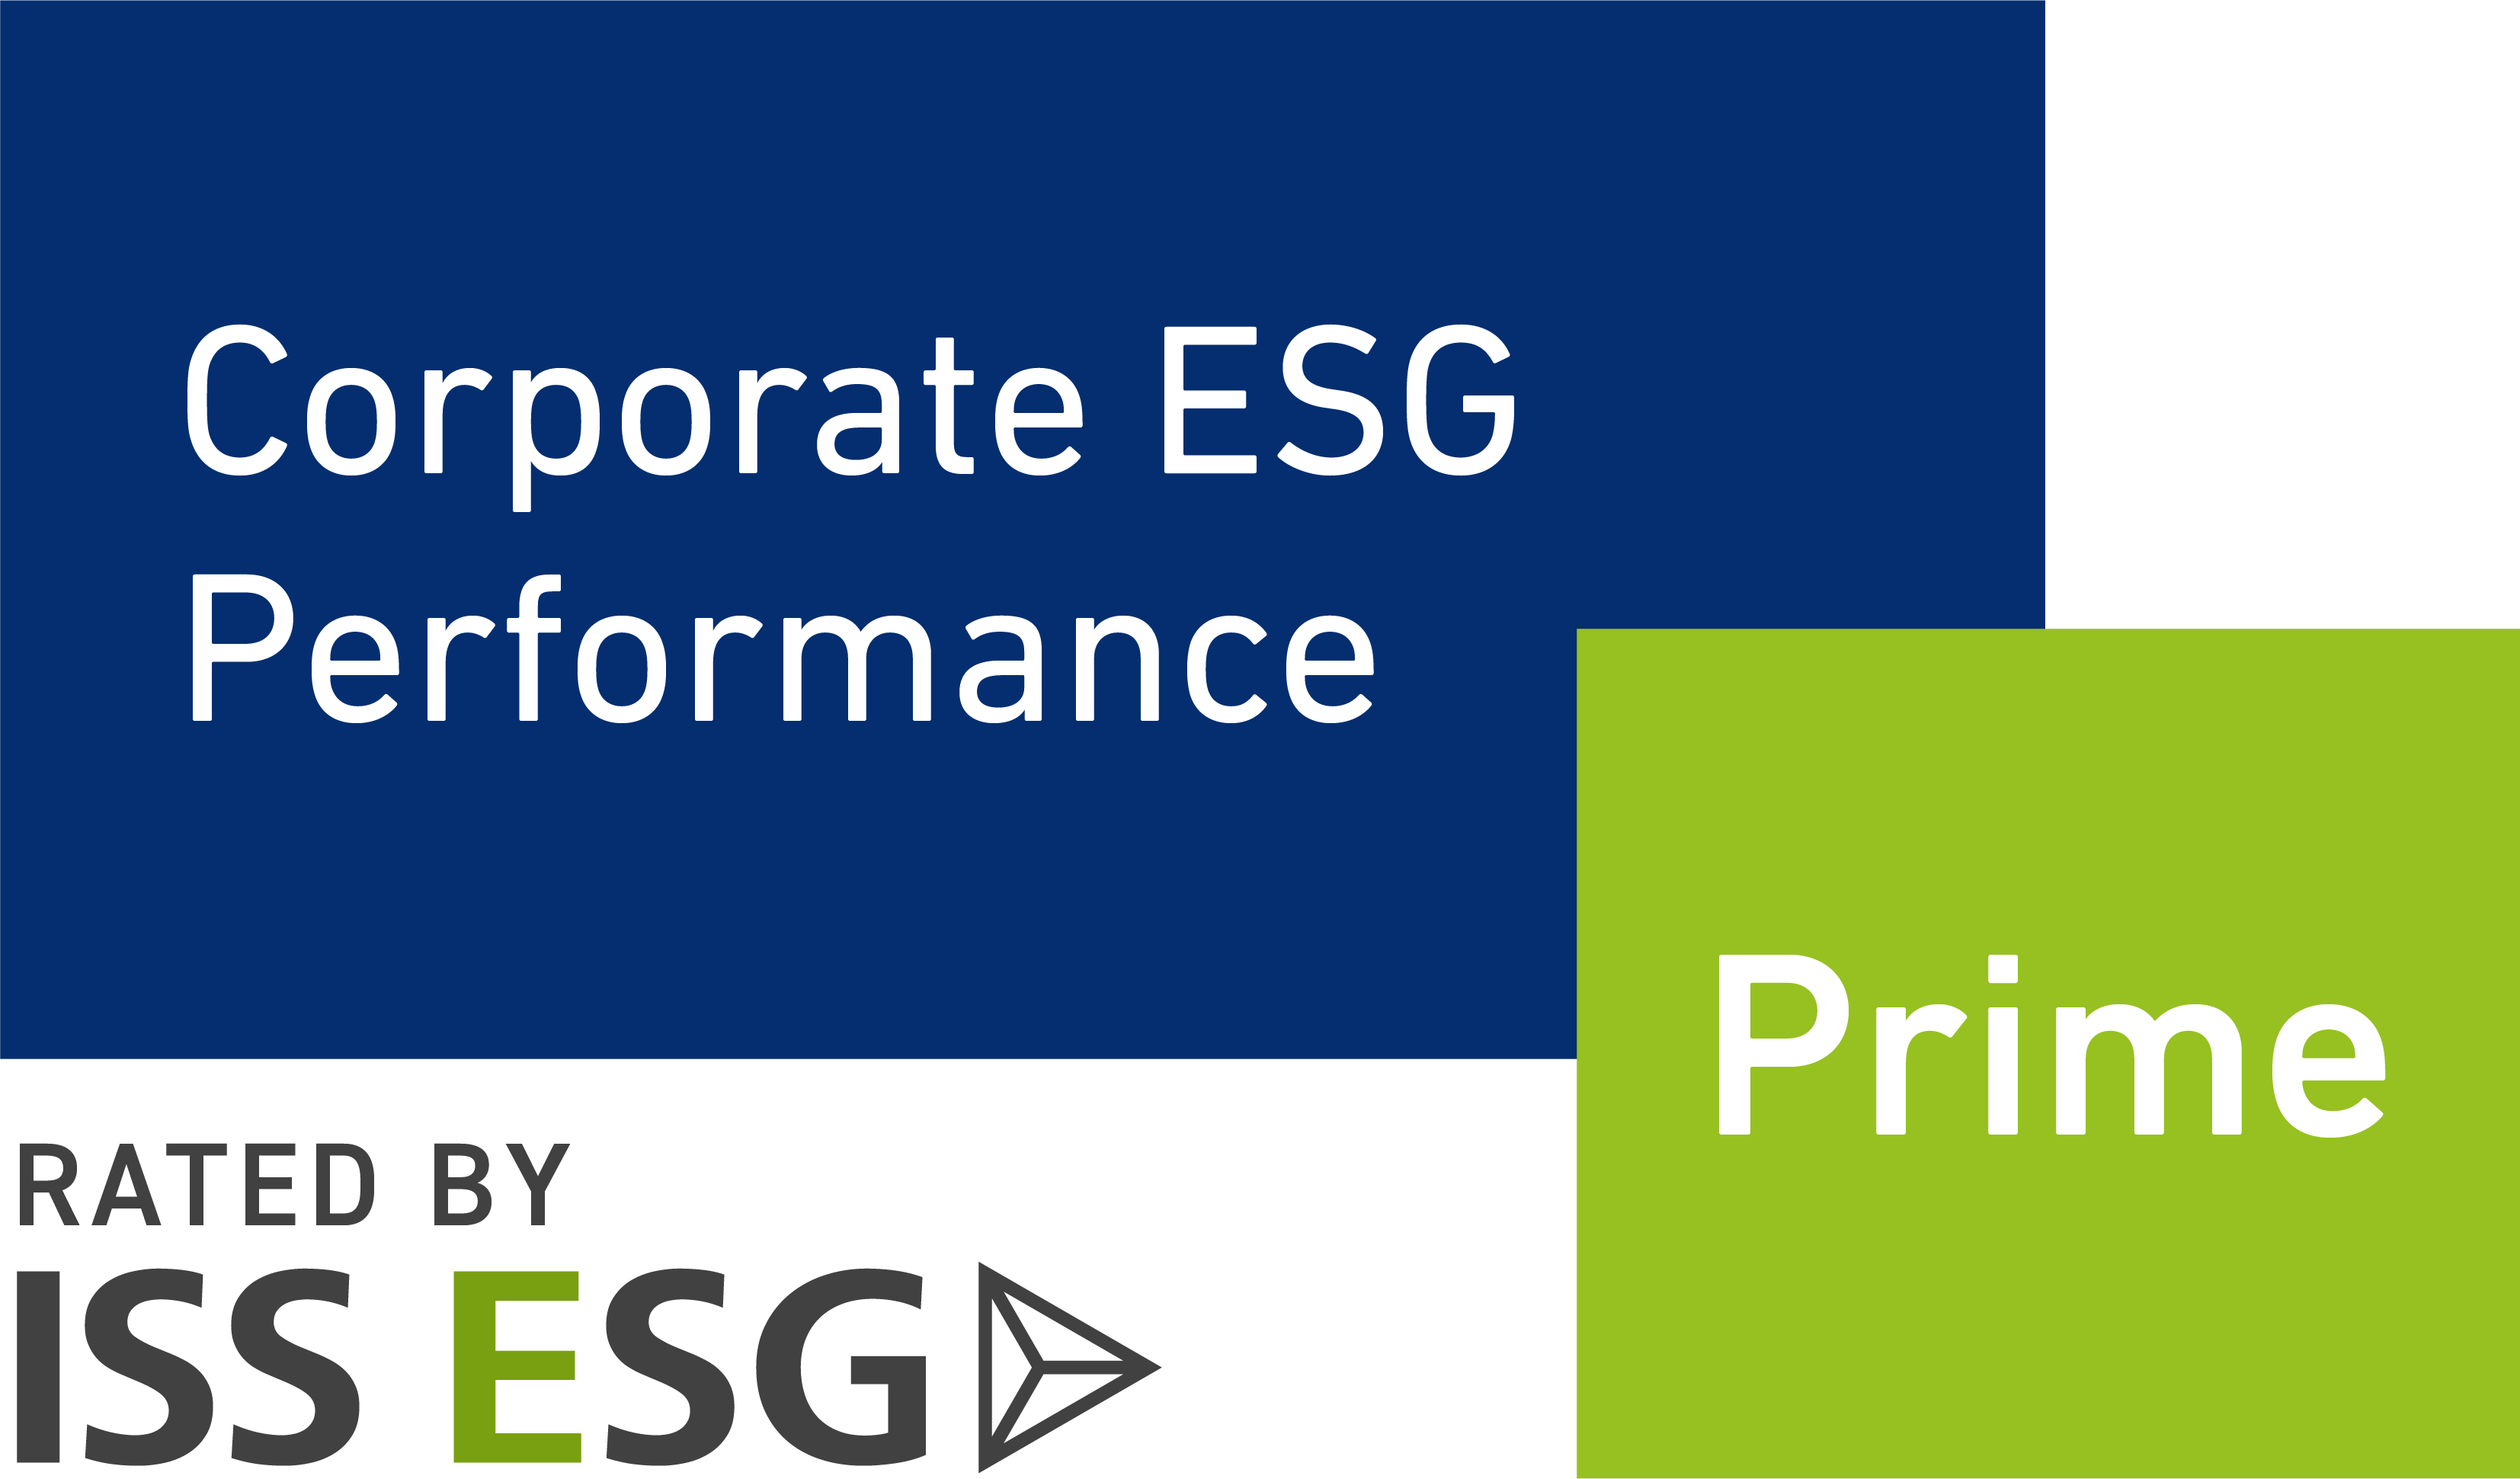 Prime Corporate ESG Performance